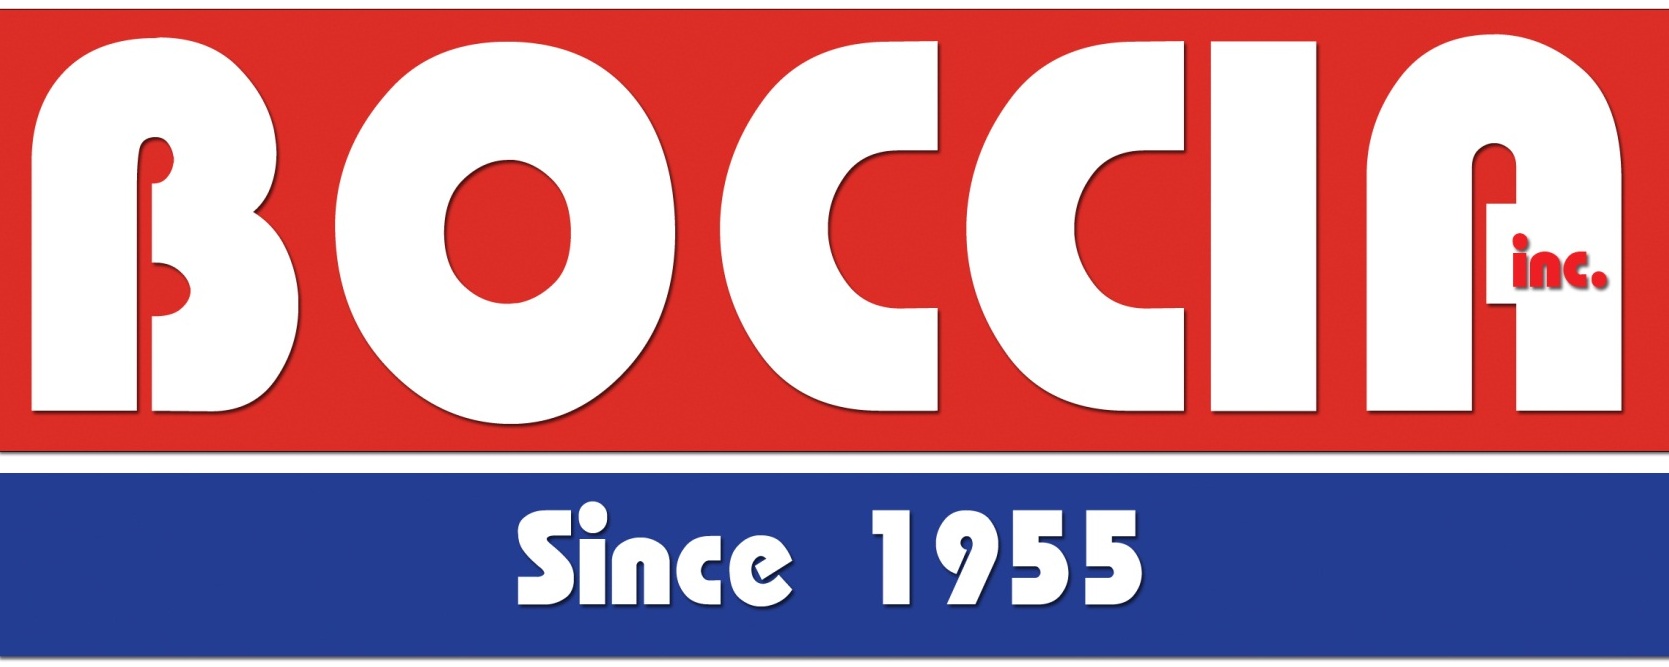 Boccia, Inc. Logo